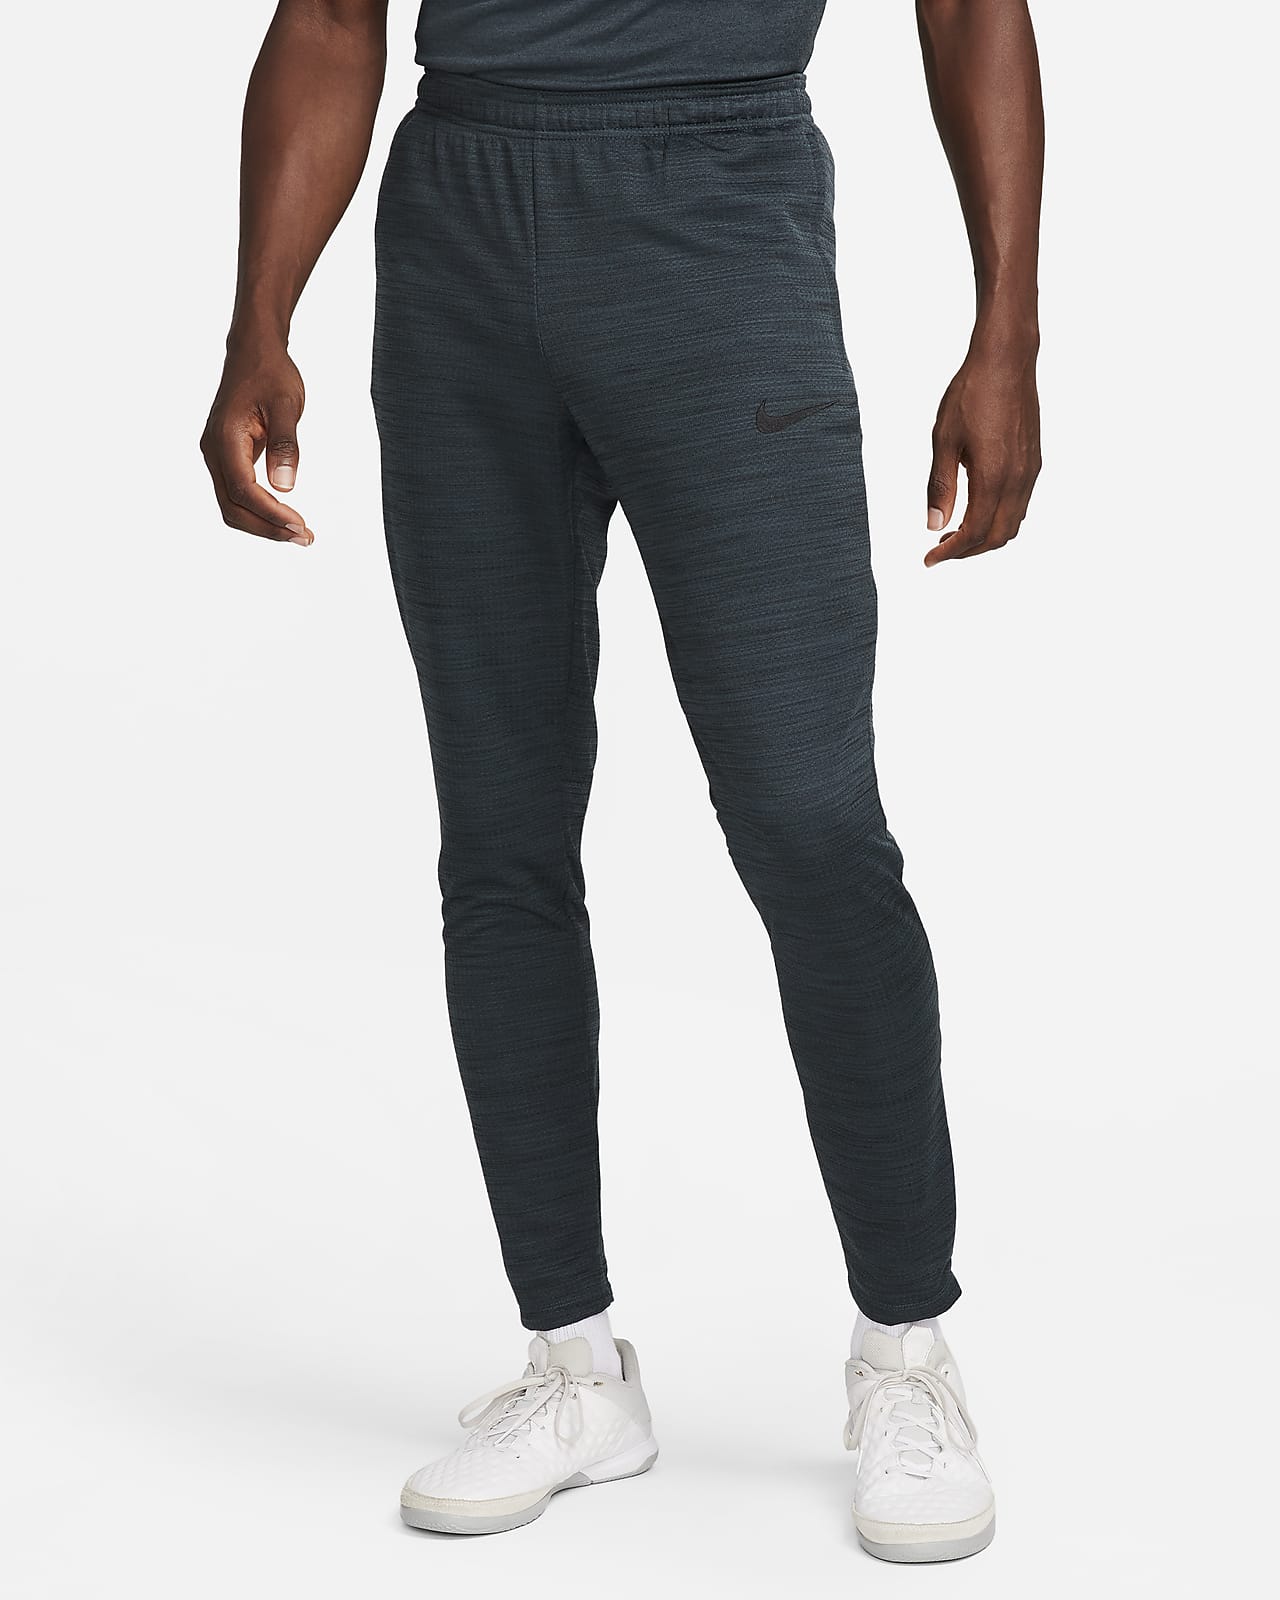 Nike Track Pants Mens Size Medium Blue Polyester 32 x 30 Measured Elastic  Waist | eBay